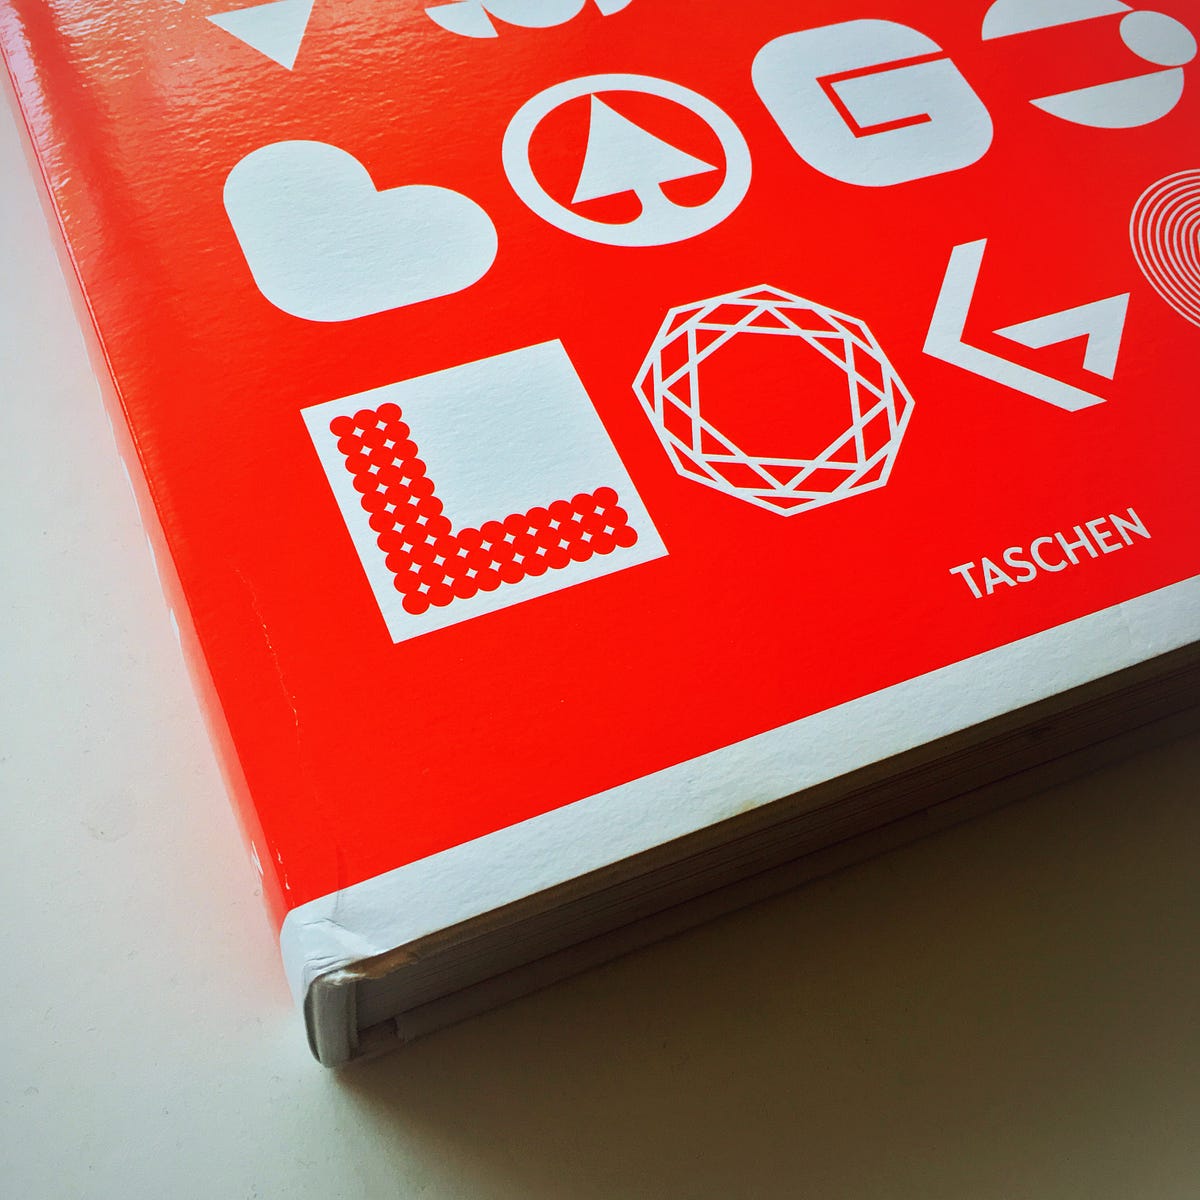 TASCHEN Books: Logo Modernism